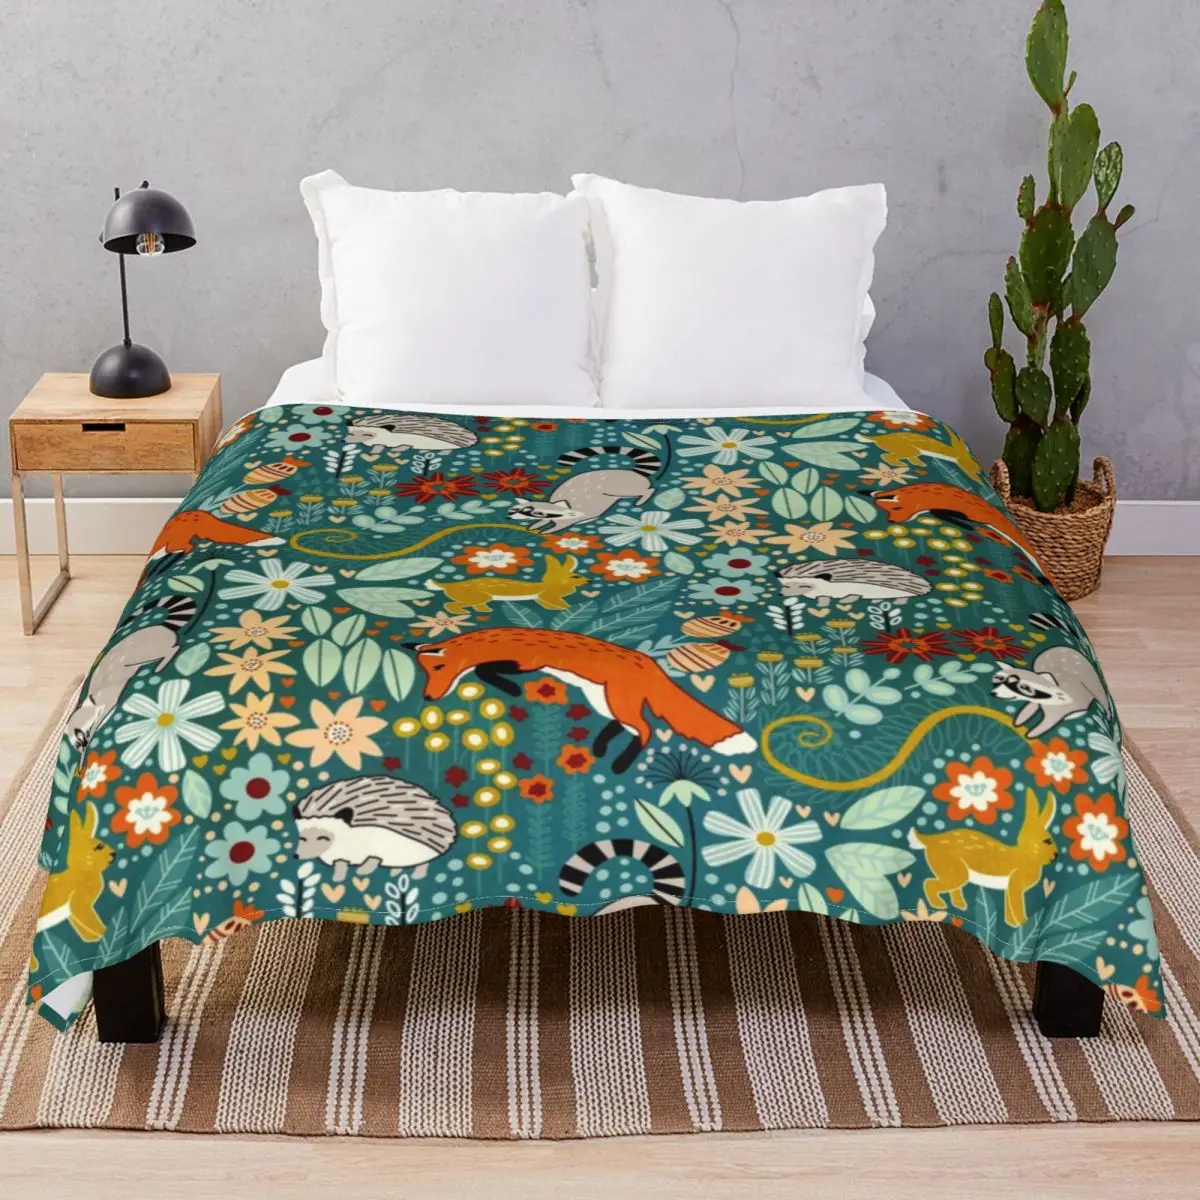 Textured Woodland Pattern Blankets Velvet Print Super Soft Unisex Throw Blanket for Bed Sofa Travel Office